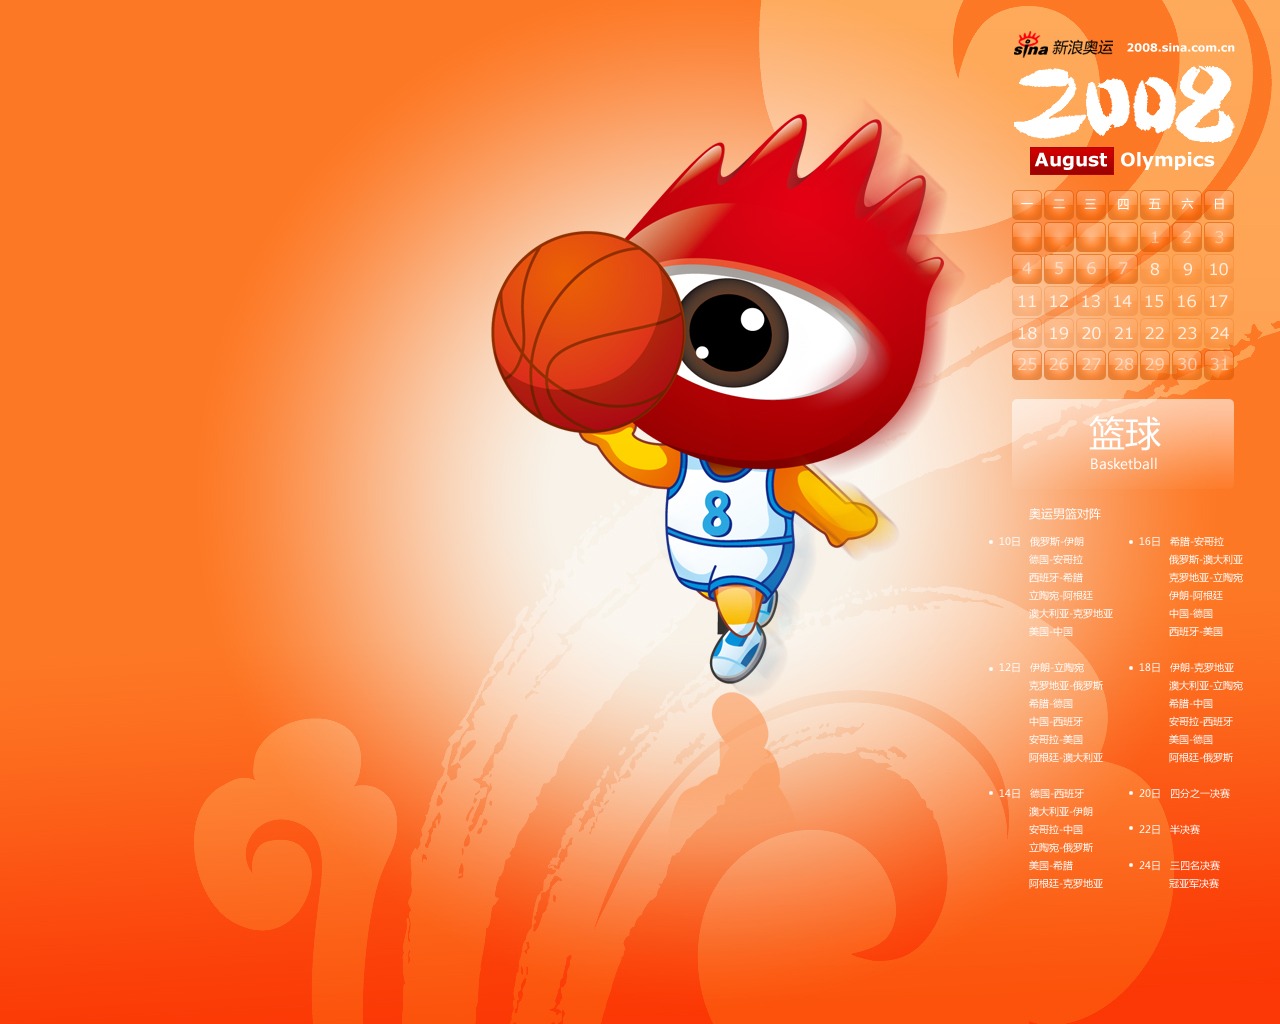 Sina Olympics Wallpaper Serie #3 - 1280x1024